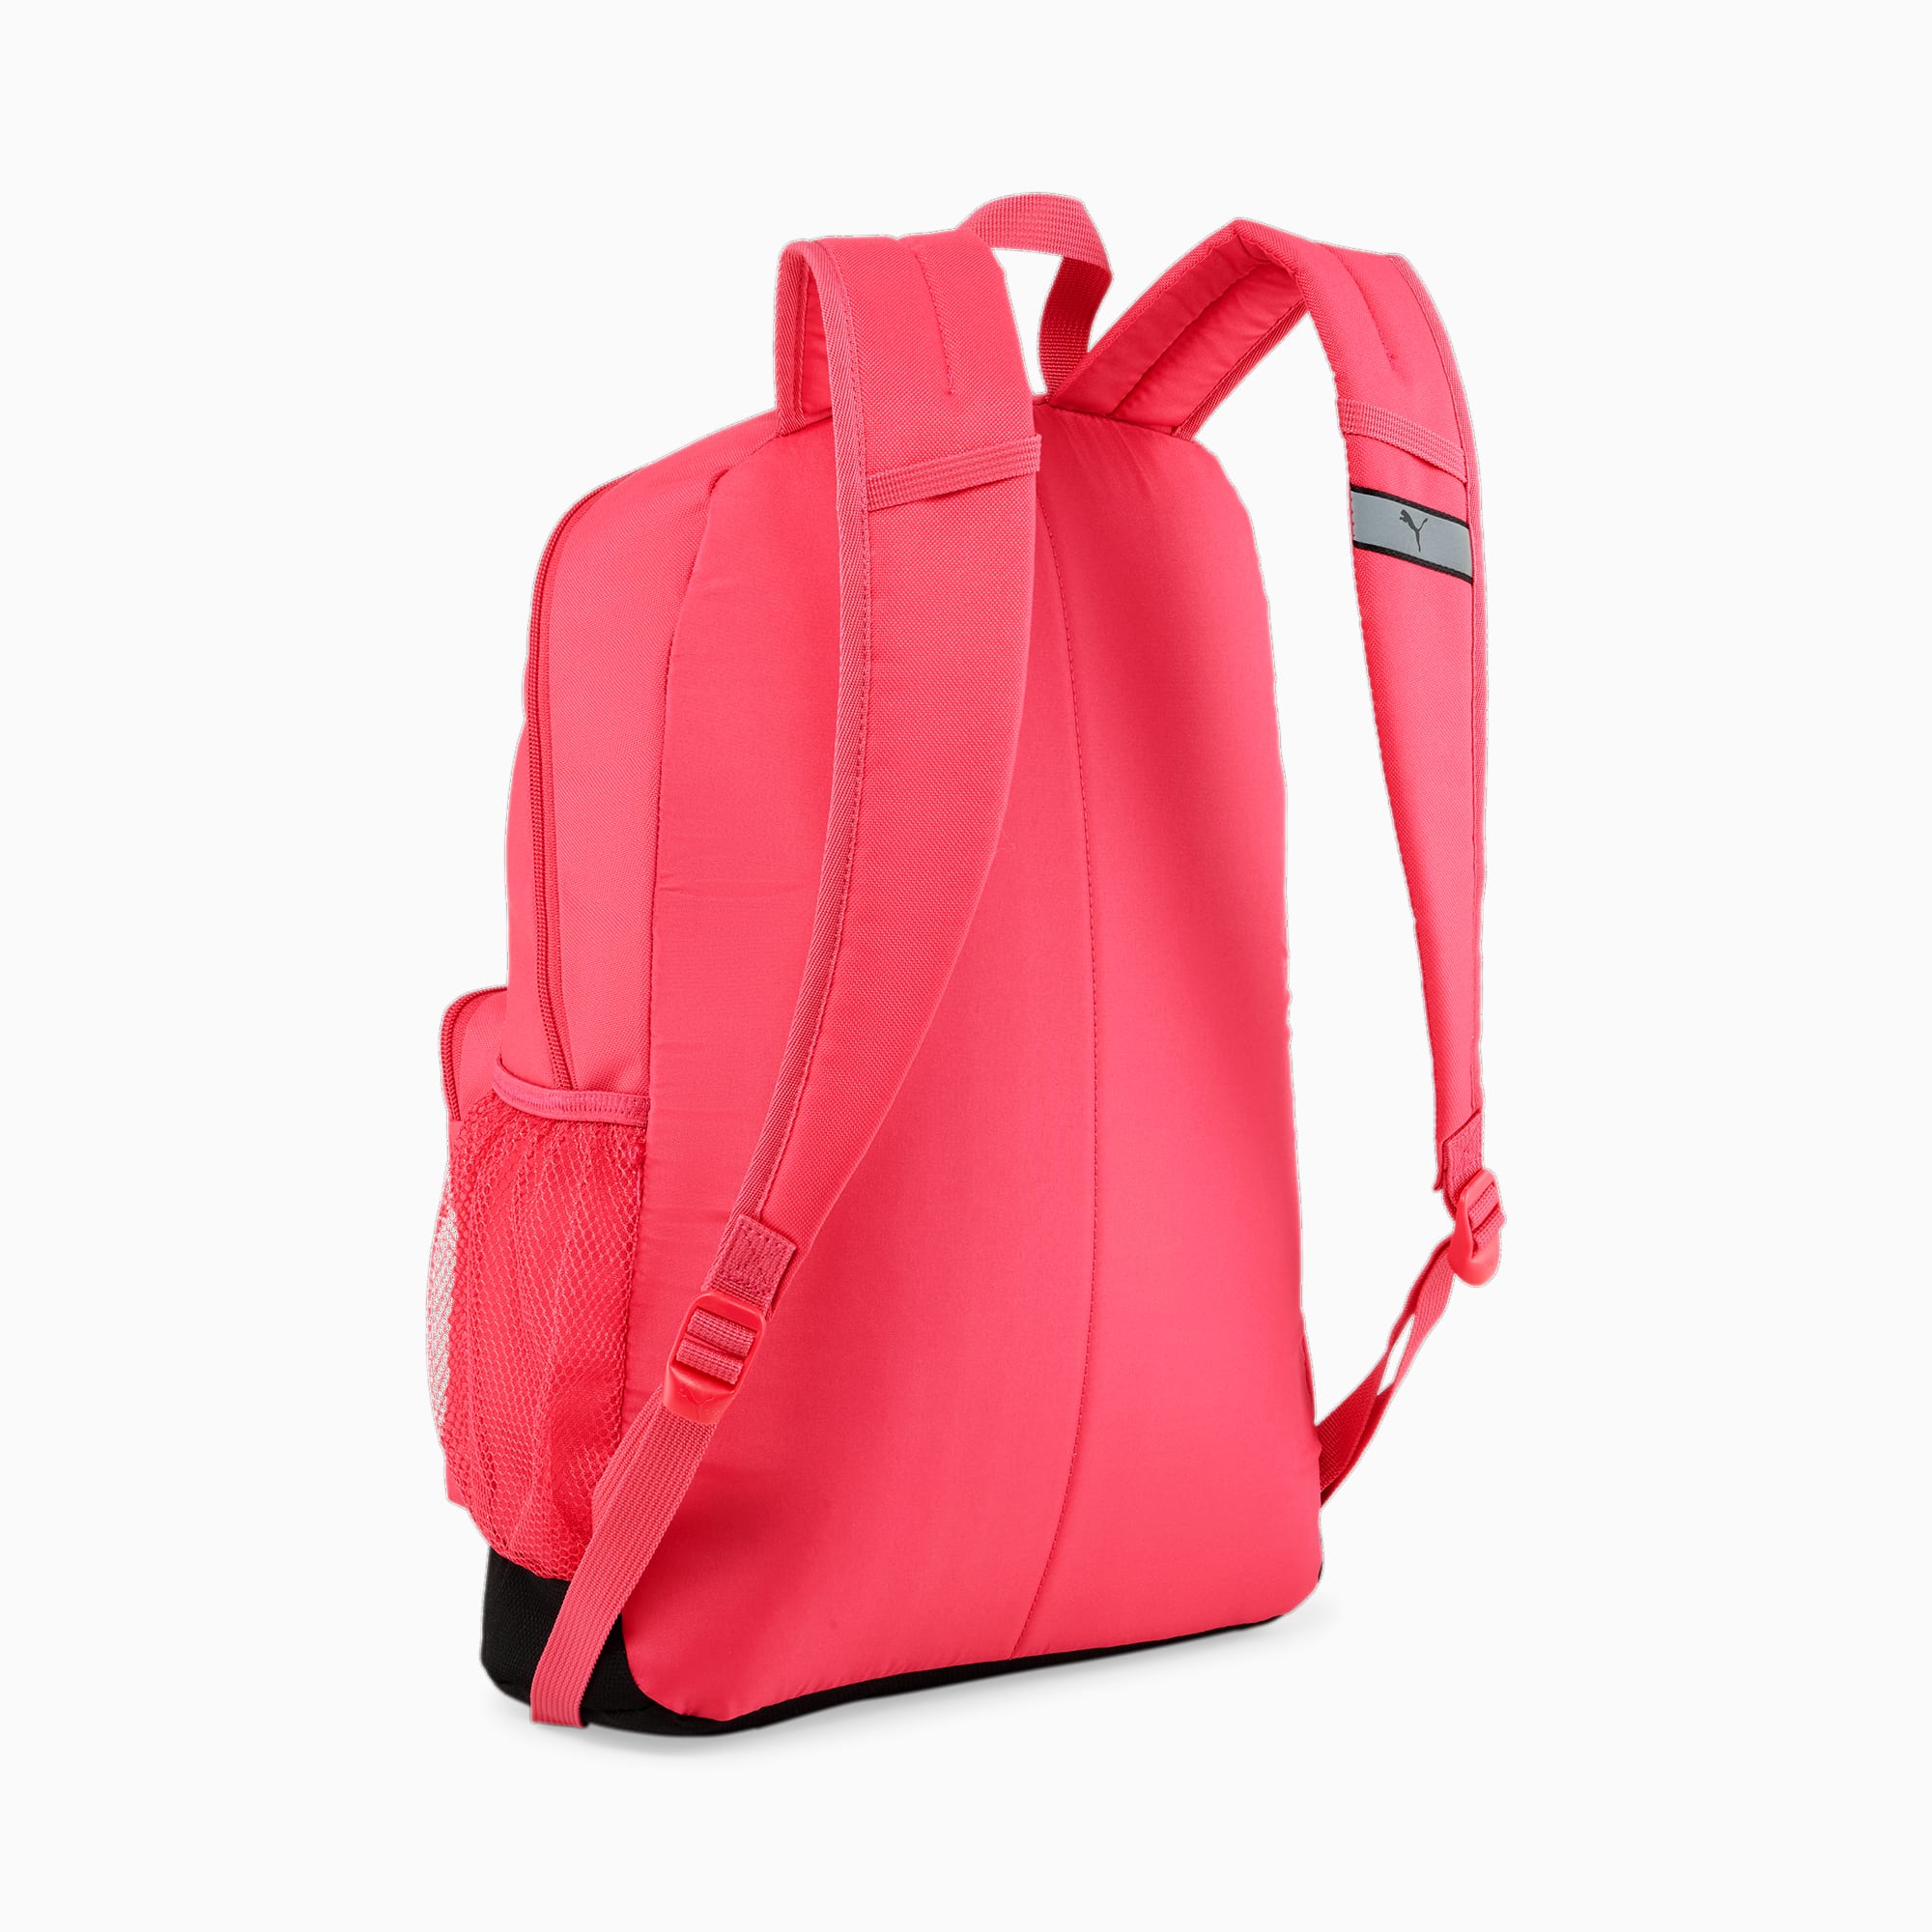 Women's PUMA Patch Backpack, Garnet Rose, Accessories